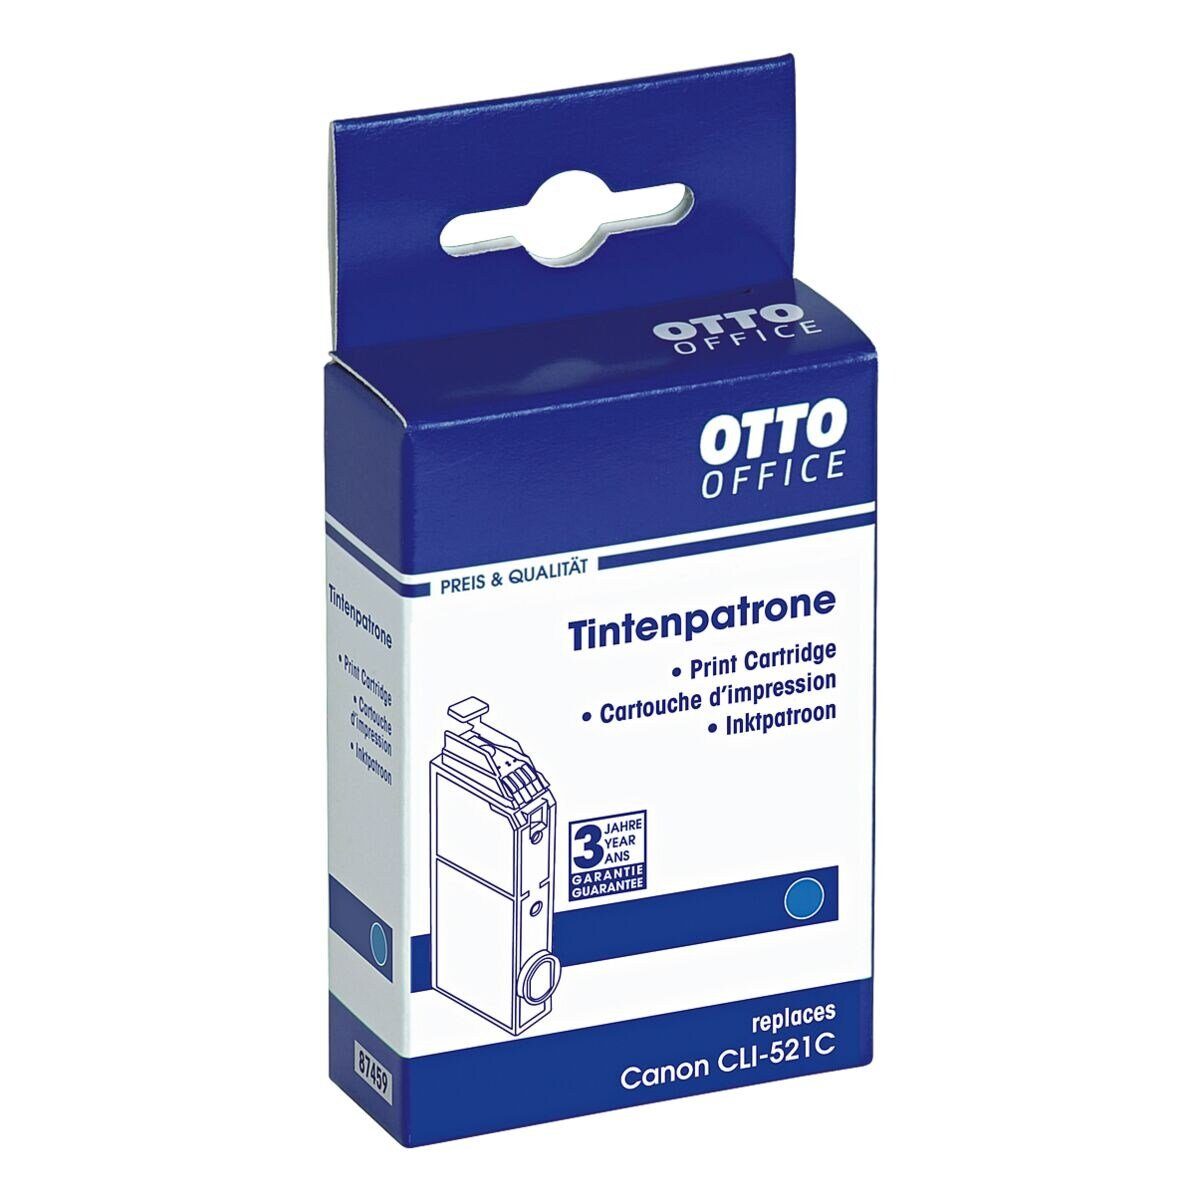 Otto Office CLI-521C Tintenpatrone (ersetzt Canon »CLI-521C«, cyan)